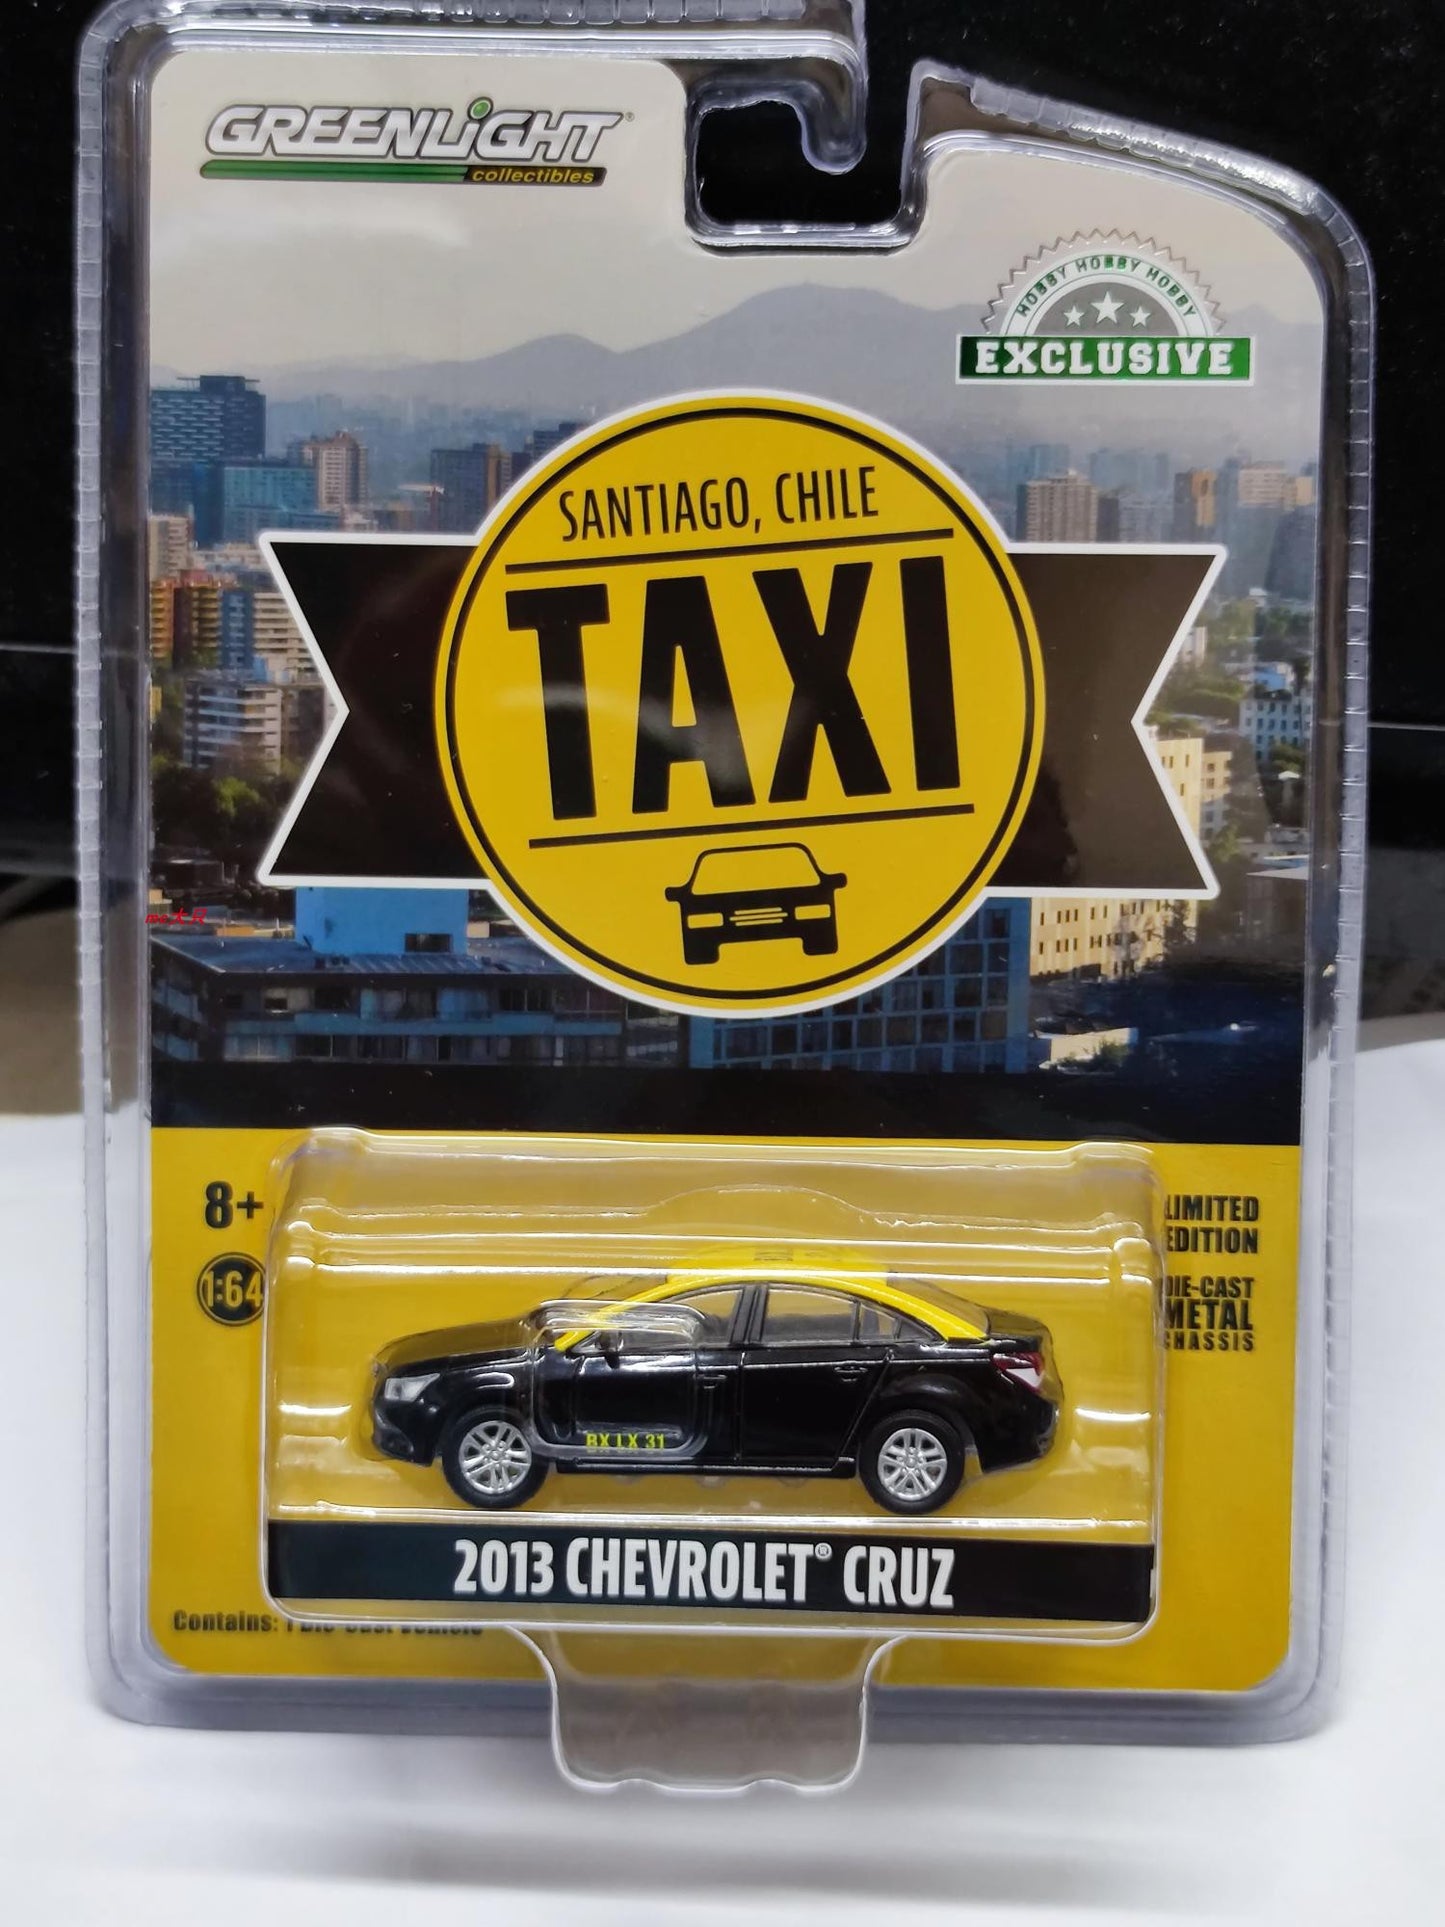 GreenLight 1:64 2013 Chevrolet Cruze - Santiago, Chile Taxi 30282